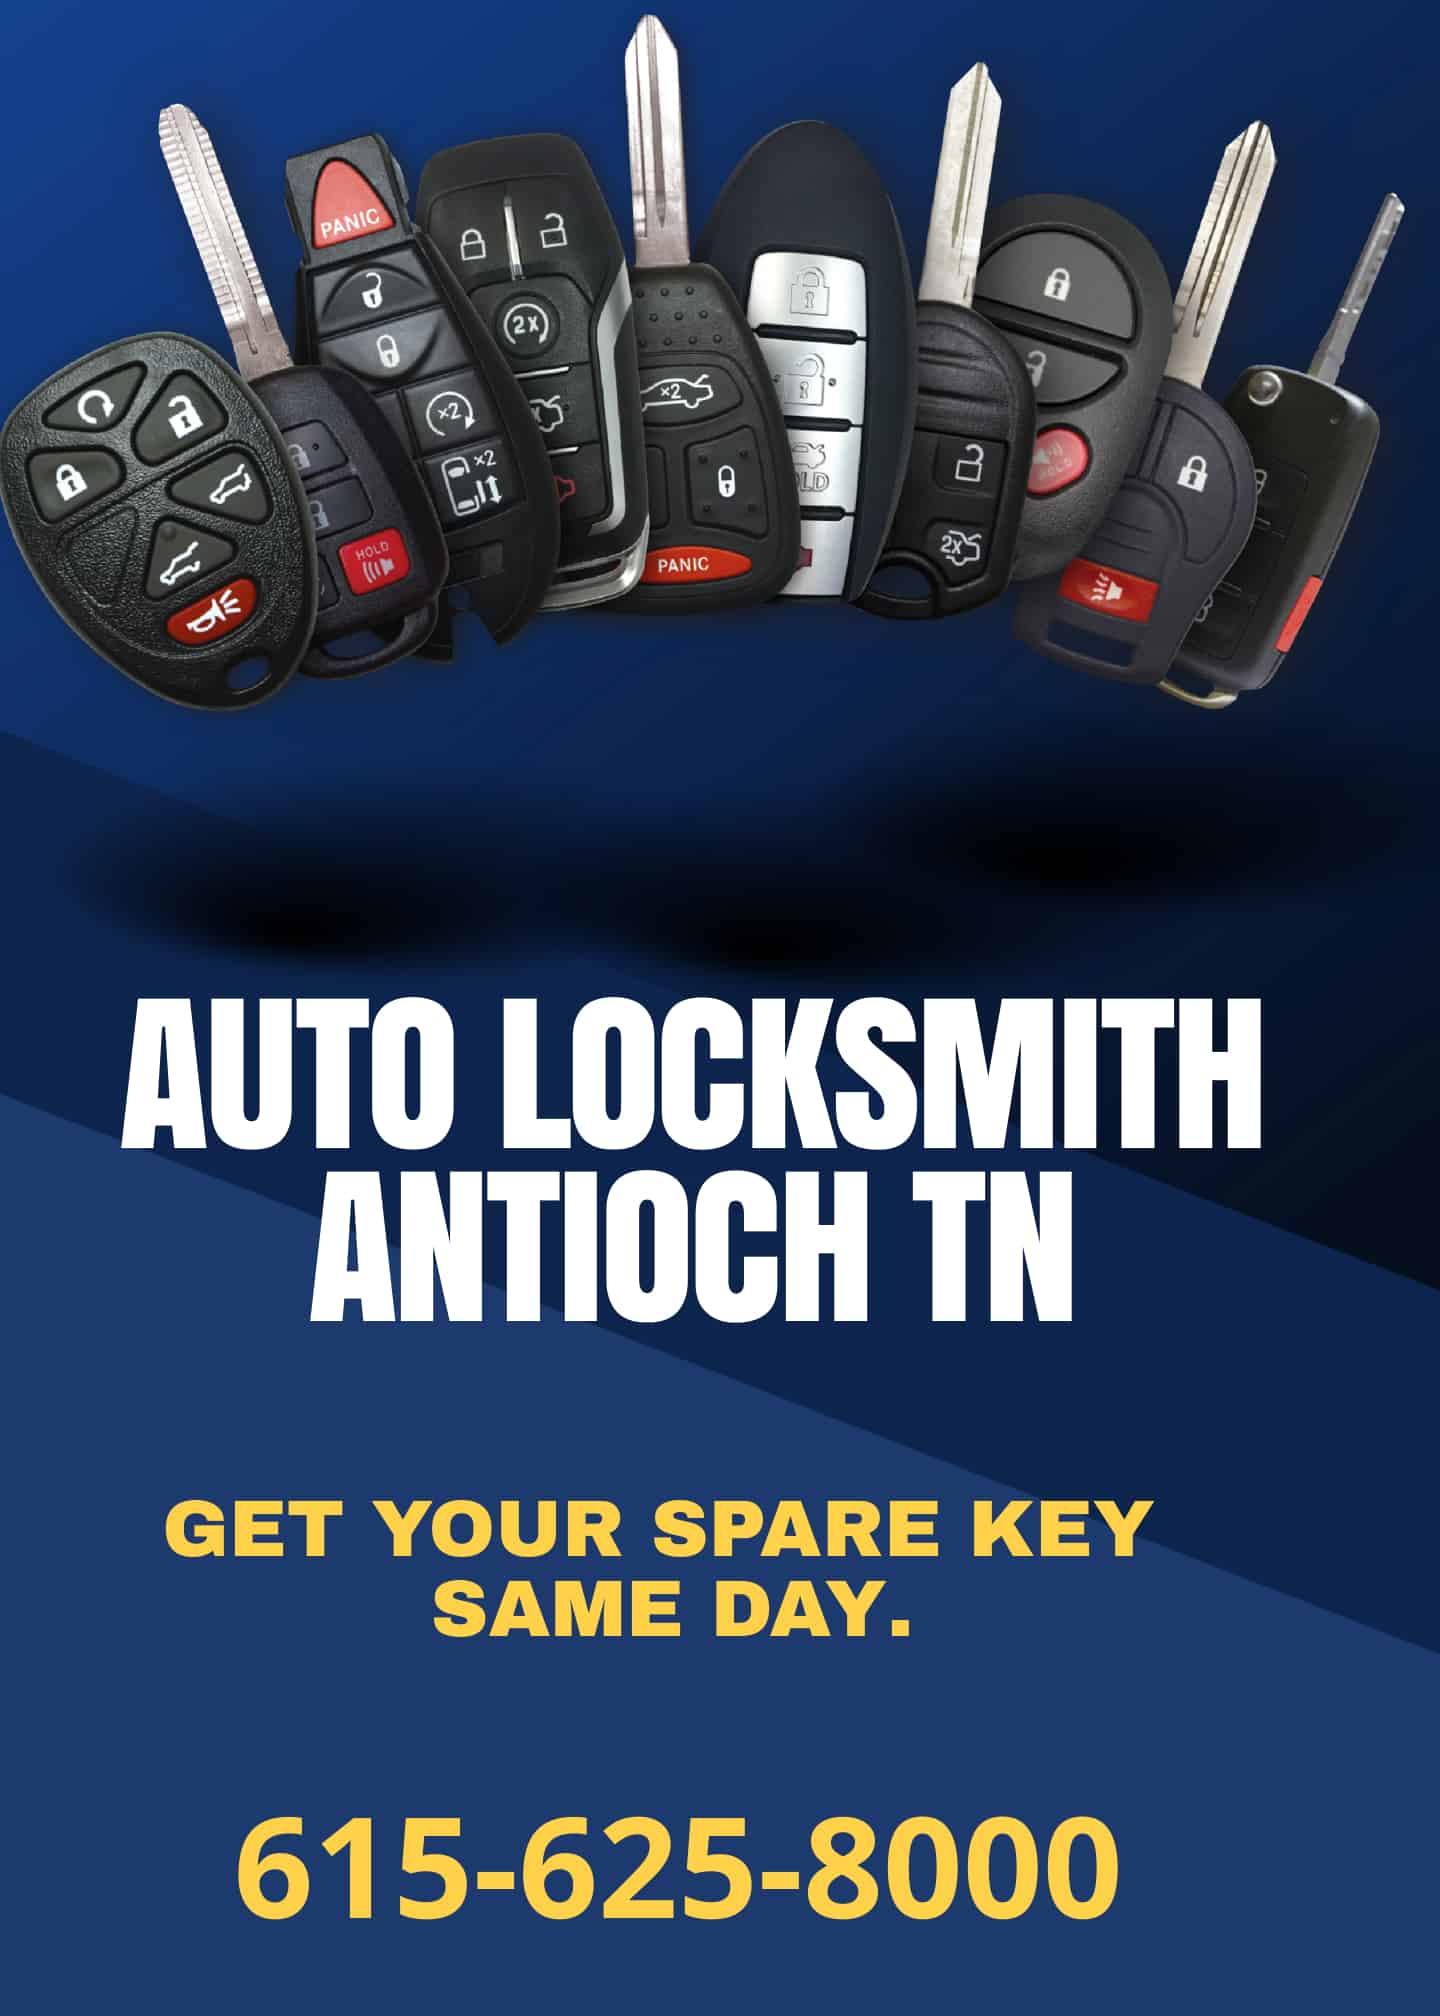 antioch auto locksmith services